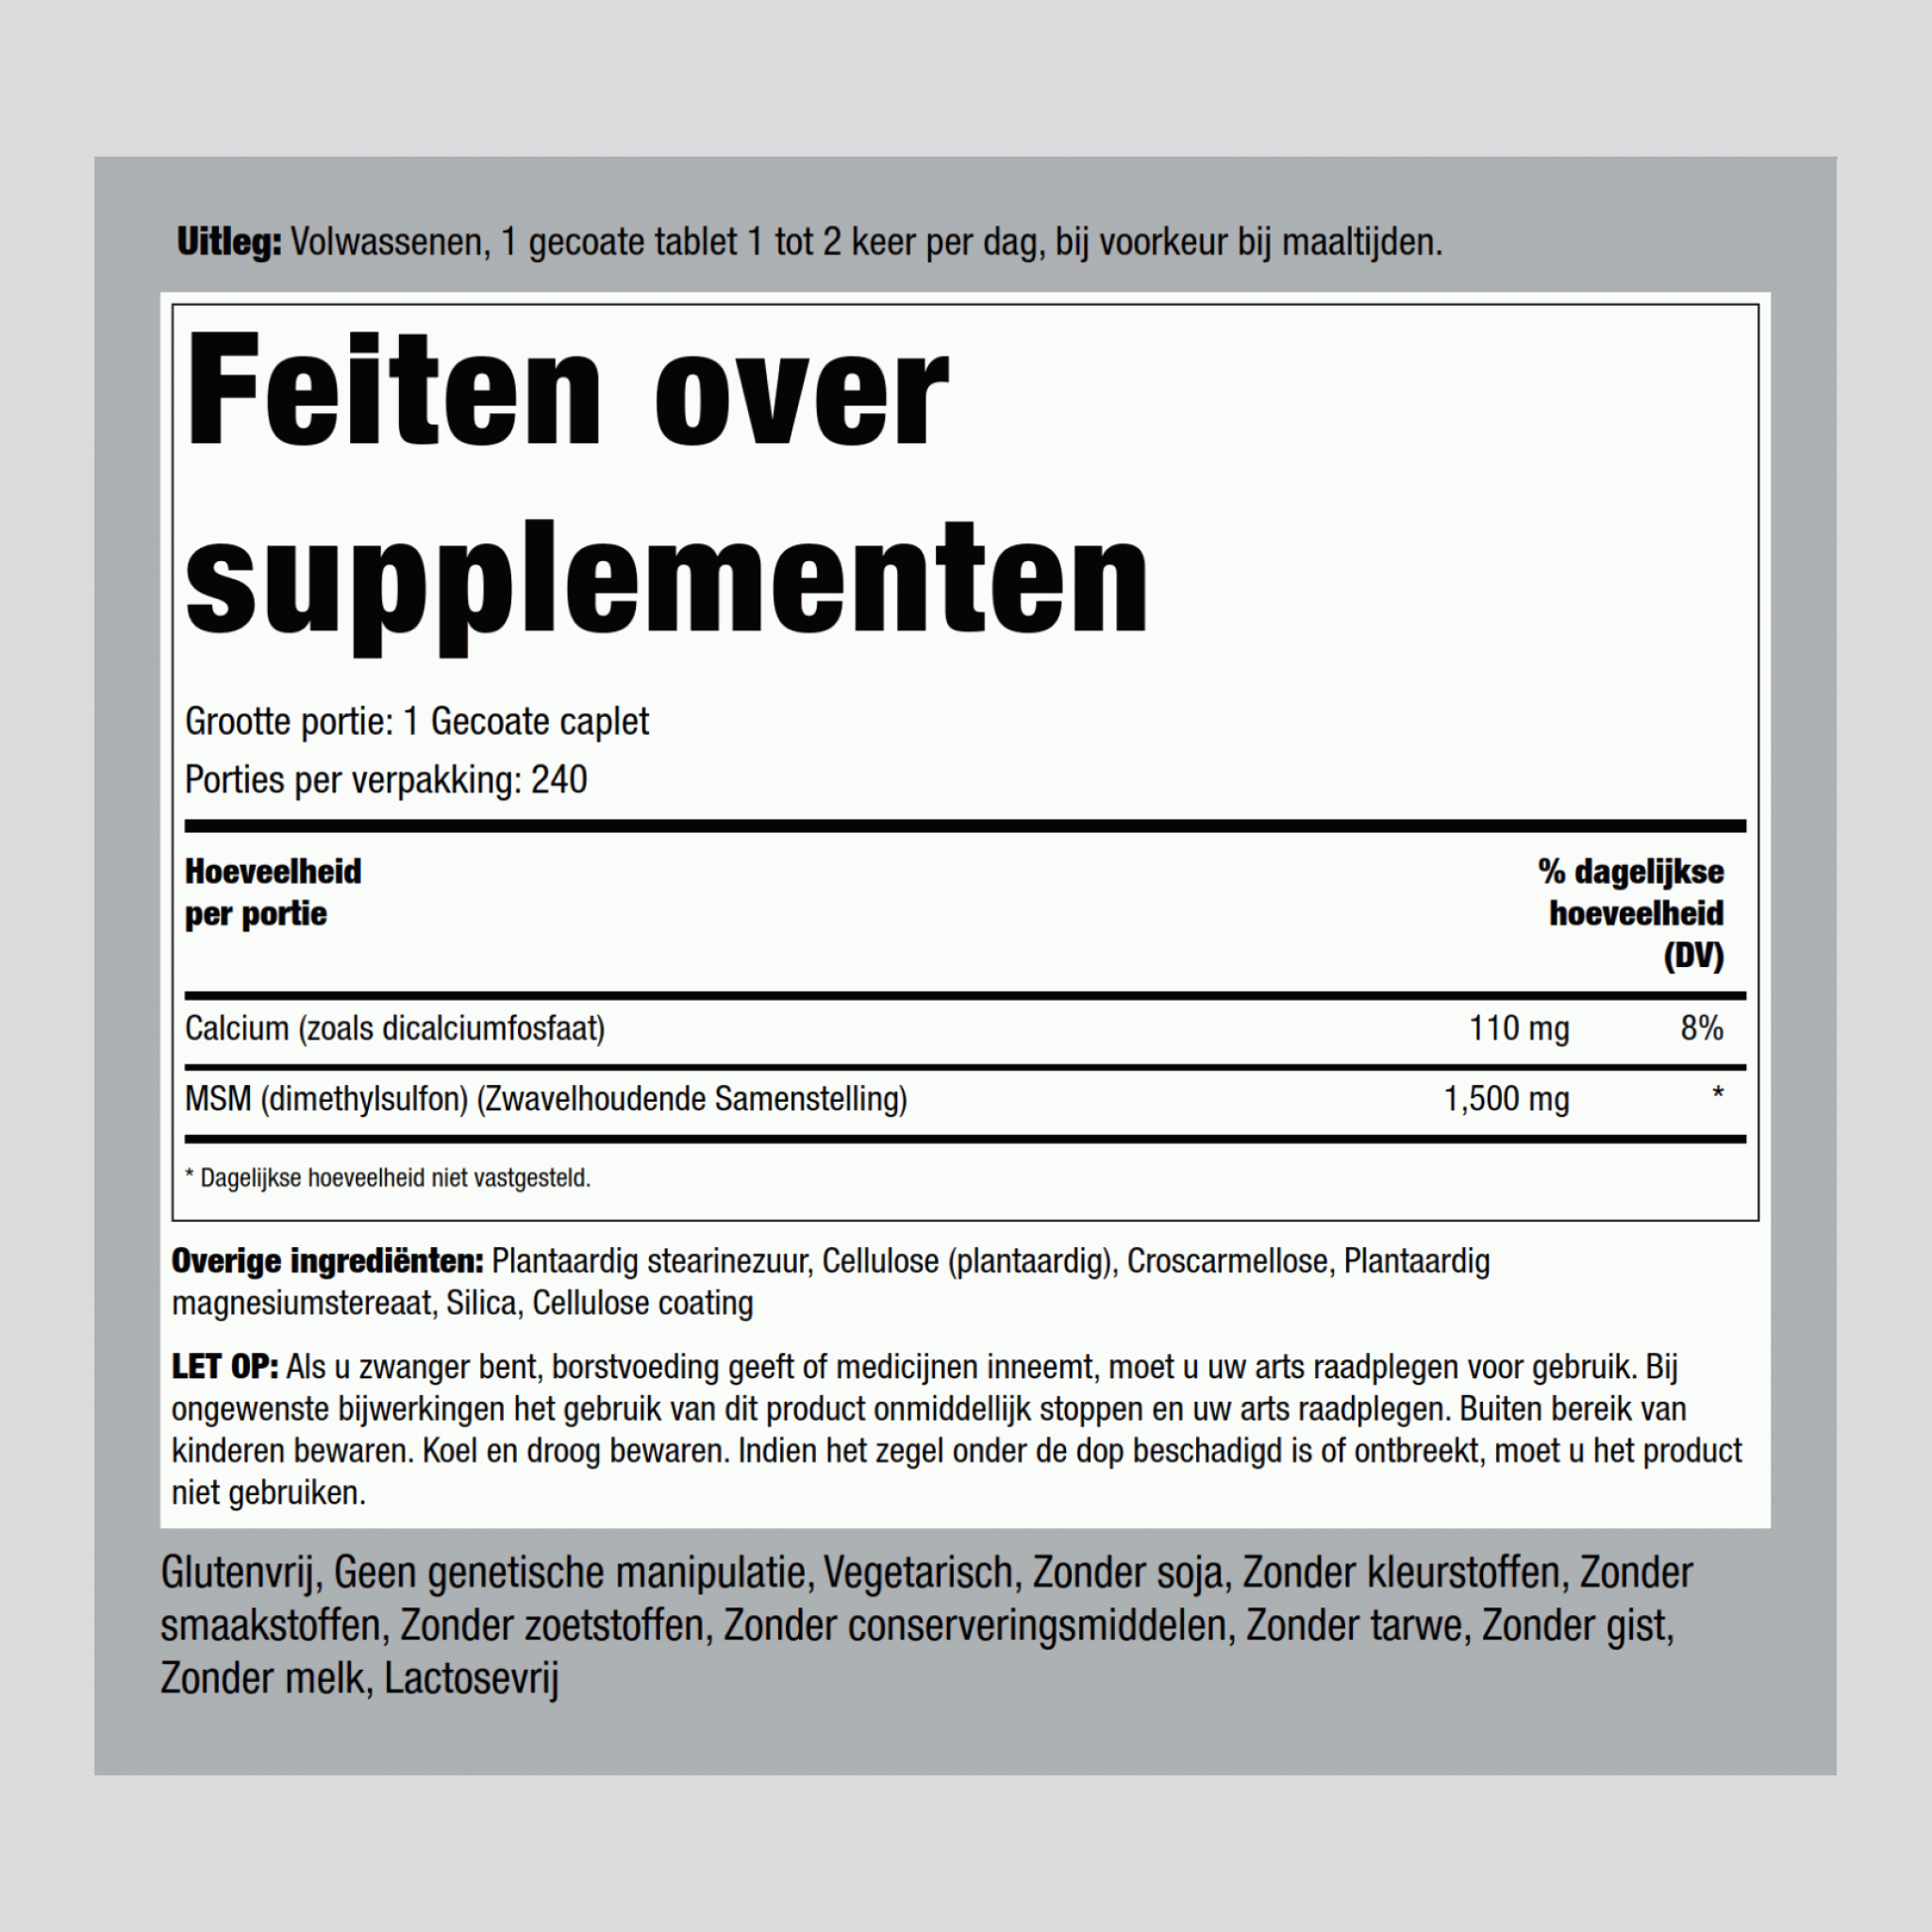 Mega MSM + Sulfur, 1500 mg, 240 Coated Caplets, 2  Bottles